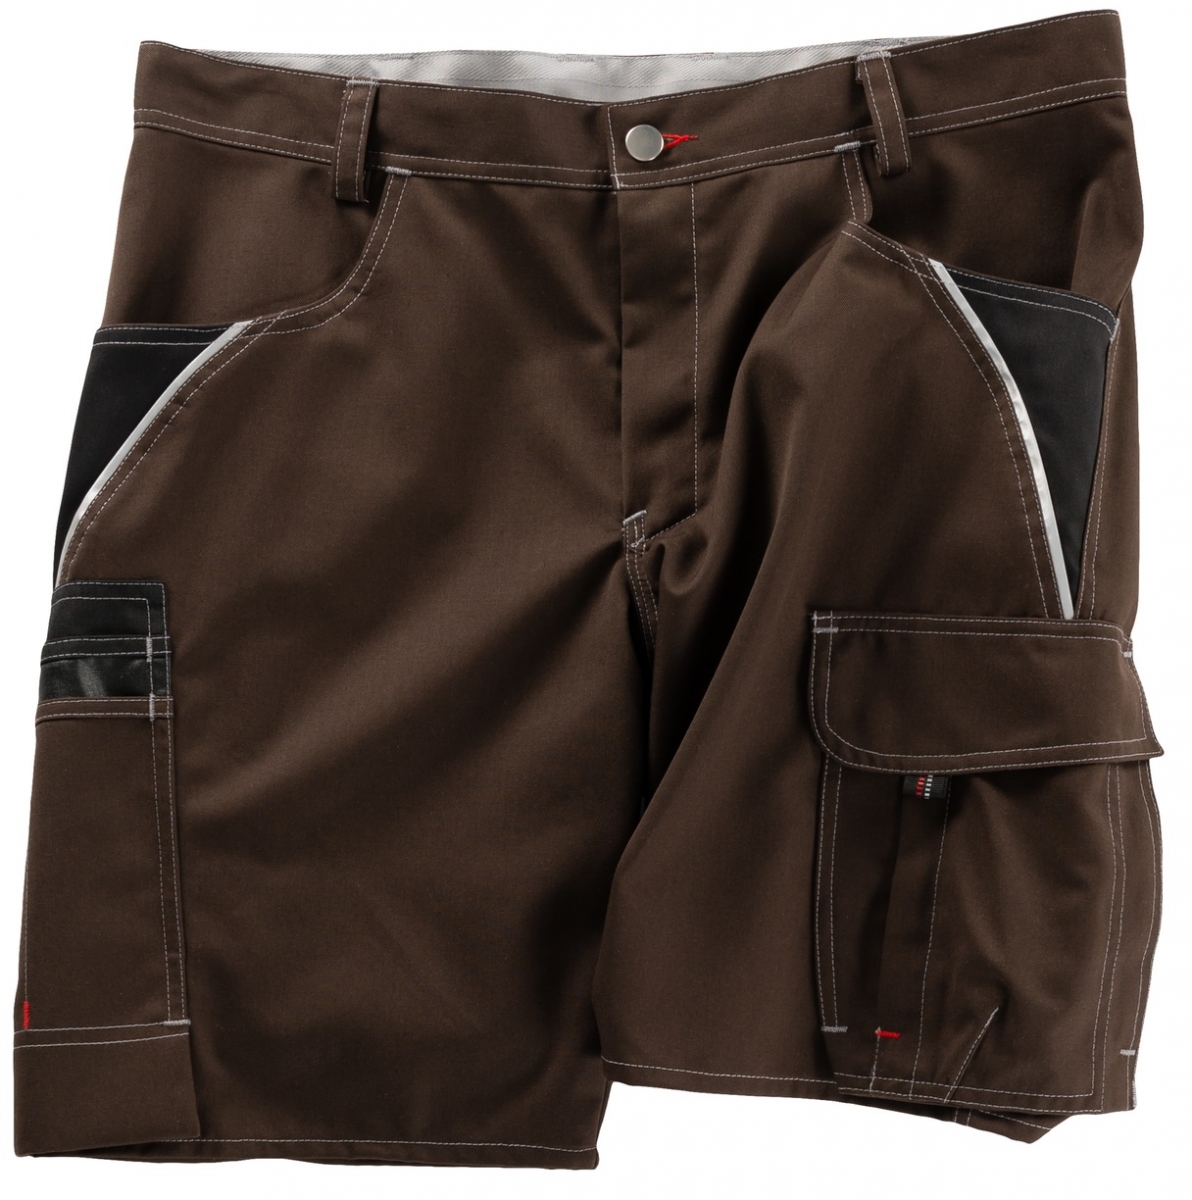 BEB-Workwear, Herren-Arbeits-Berufs-Shorts, Inflame chocolate brown/schwarz